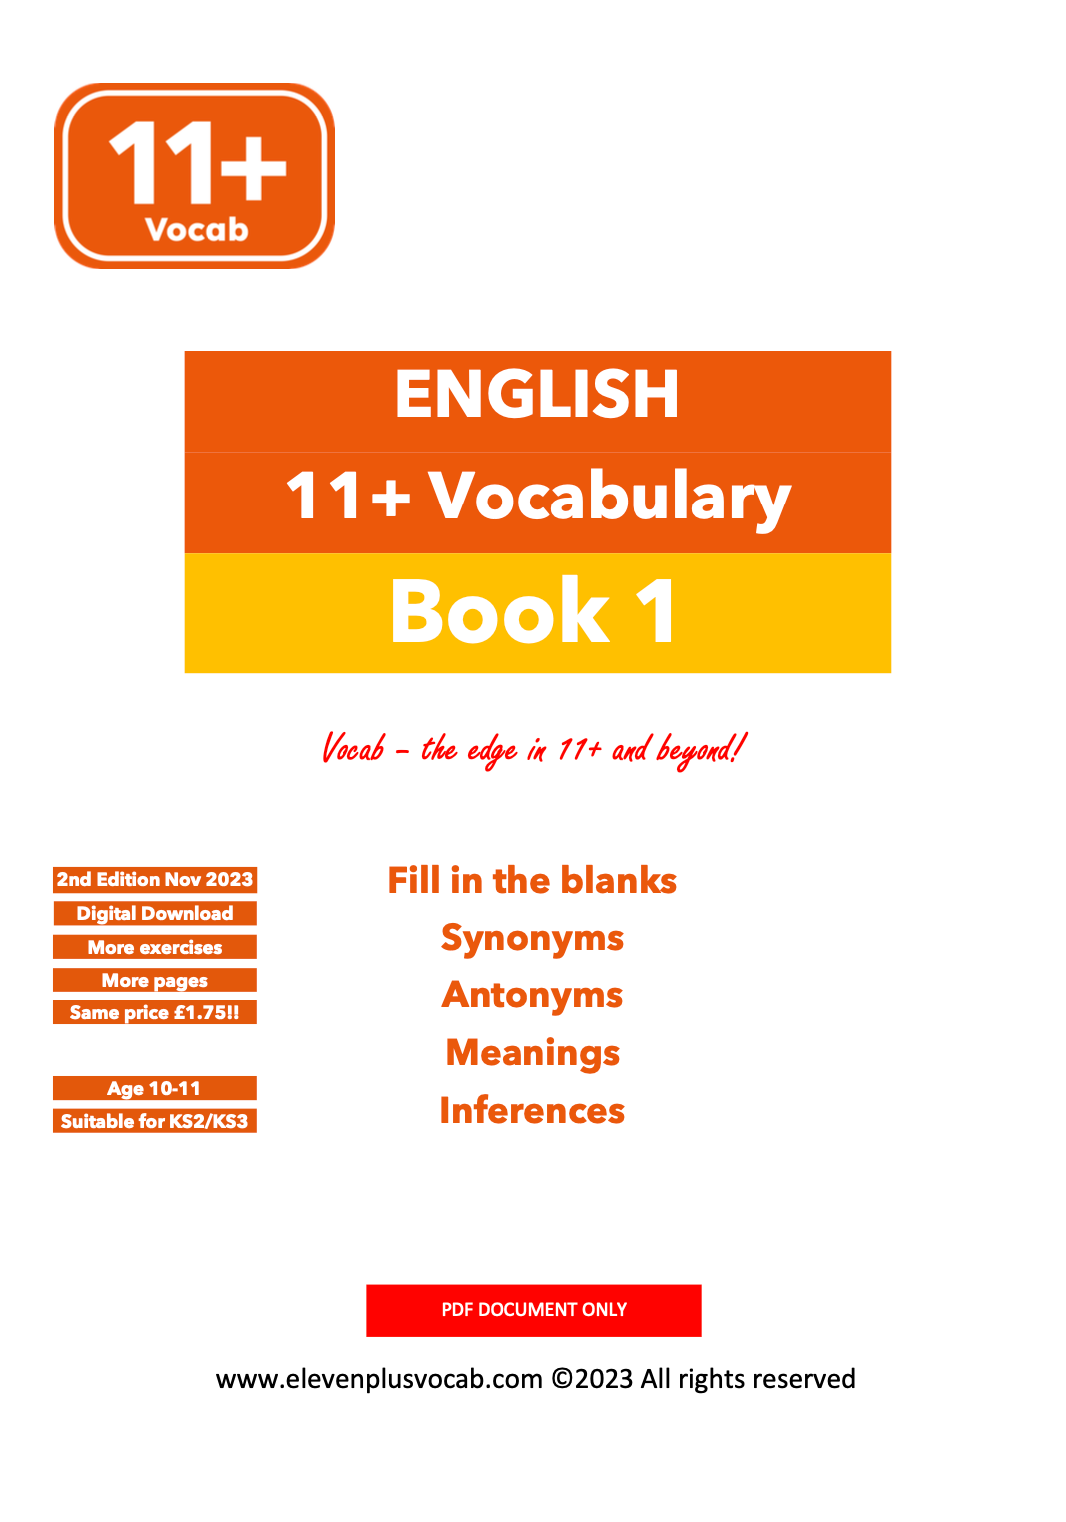 11+ English Vocab - PDF Book 1 (2nd Edition)